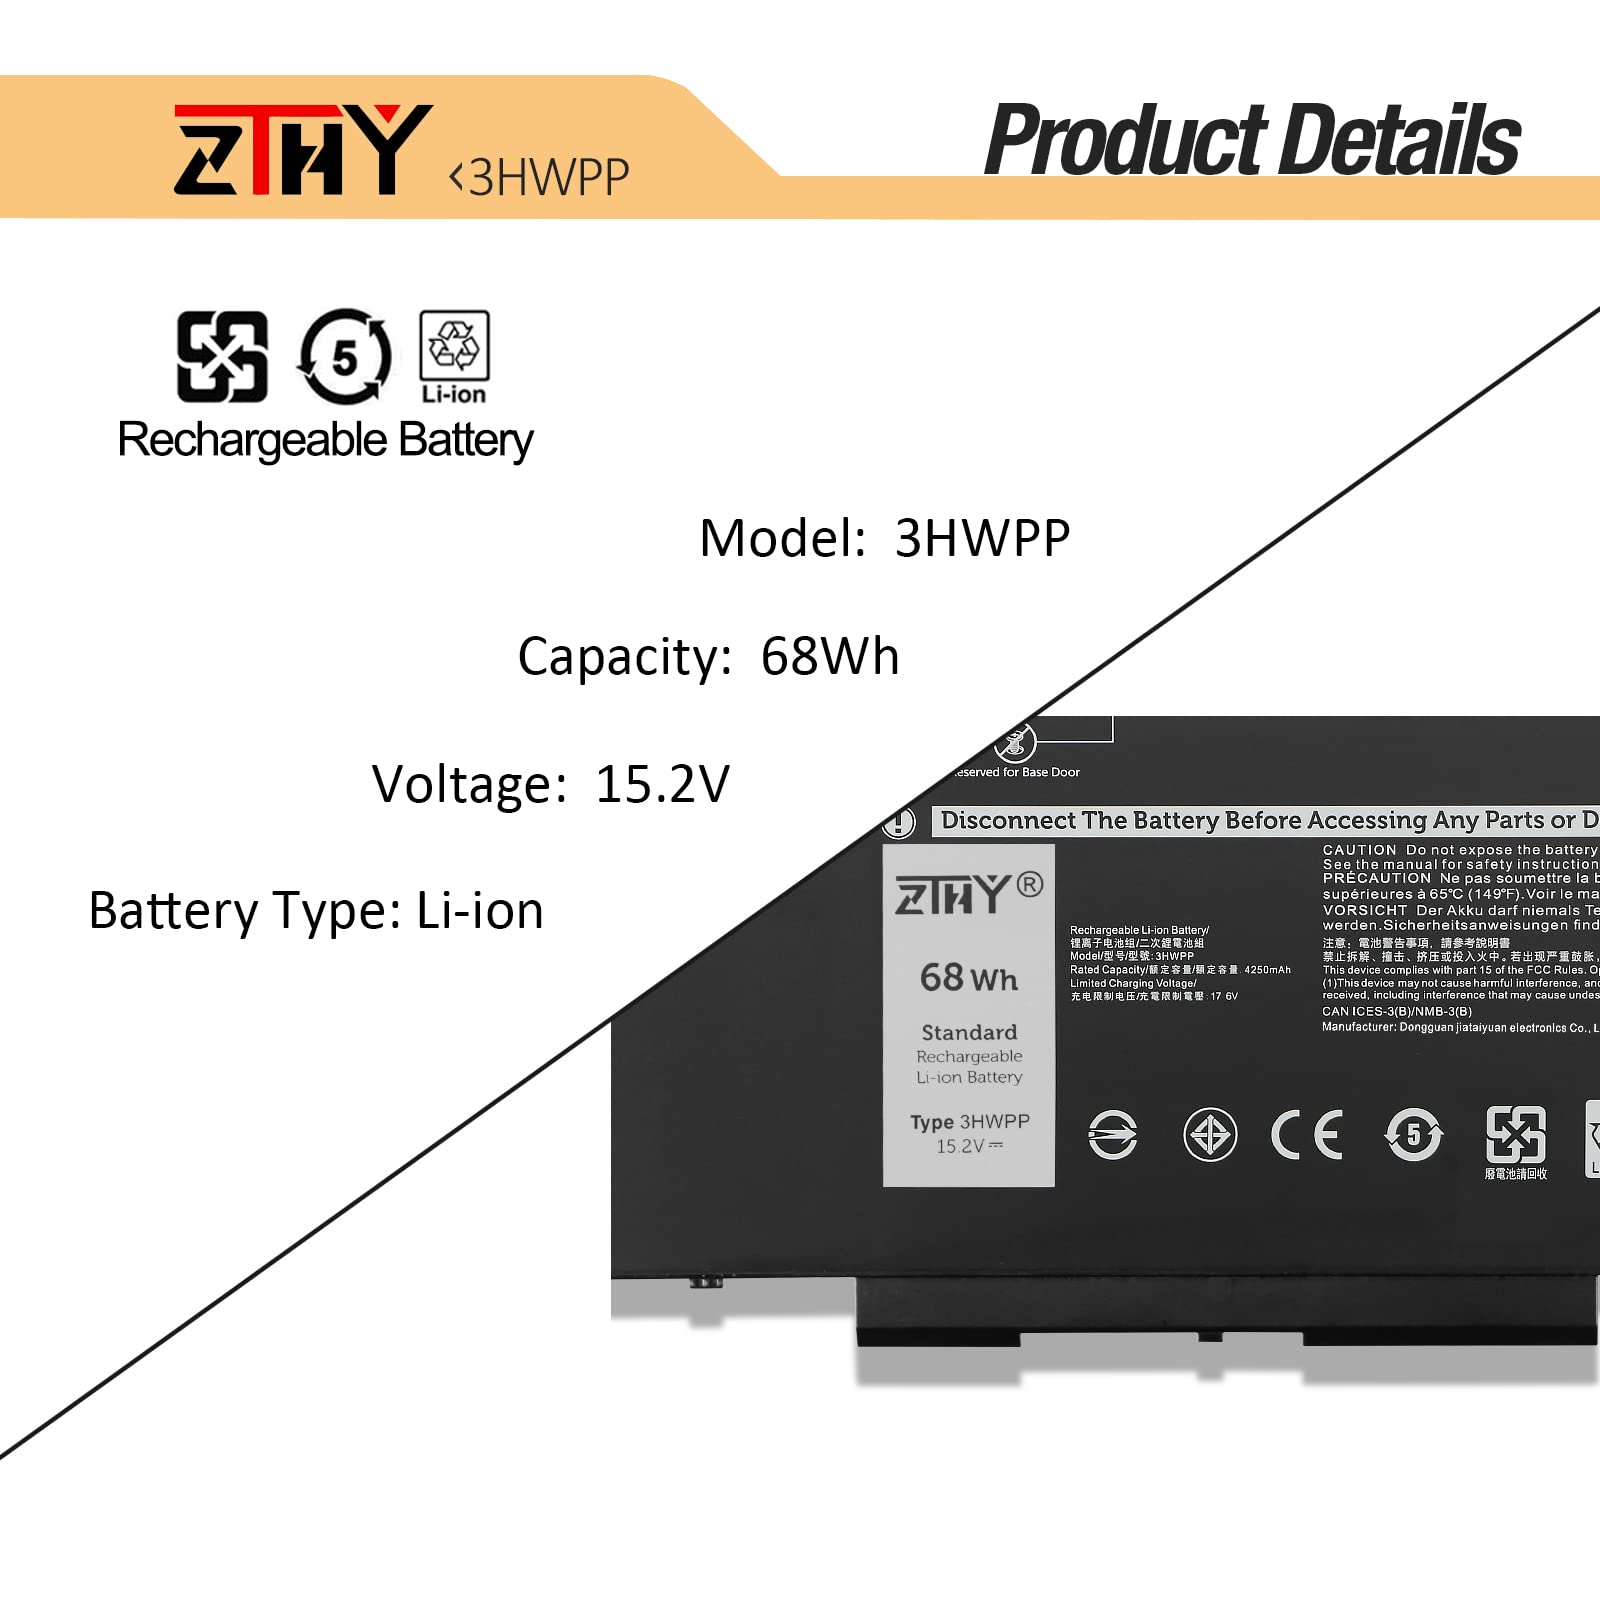 Mua ZTHY 3HWPP Laptop Battery Replacement for Dell Latitude 5401 5410 5411  5501 5510 5511 Precision 3541 3551 Inspiron 7706 2-in-1 Inspiron 17  7500/7506 2-in-1 Black 10X1J N2NLL 1VY7F 451-BCMN  68Wh trên Amazon Mỹ  chính hãng 2023 | Giaonhan247